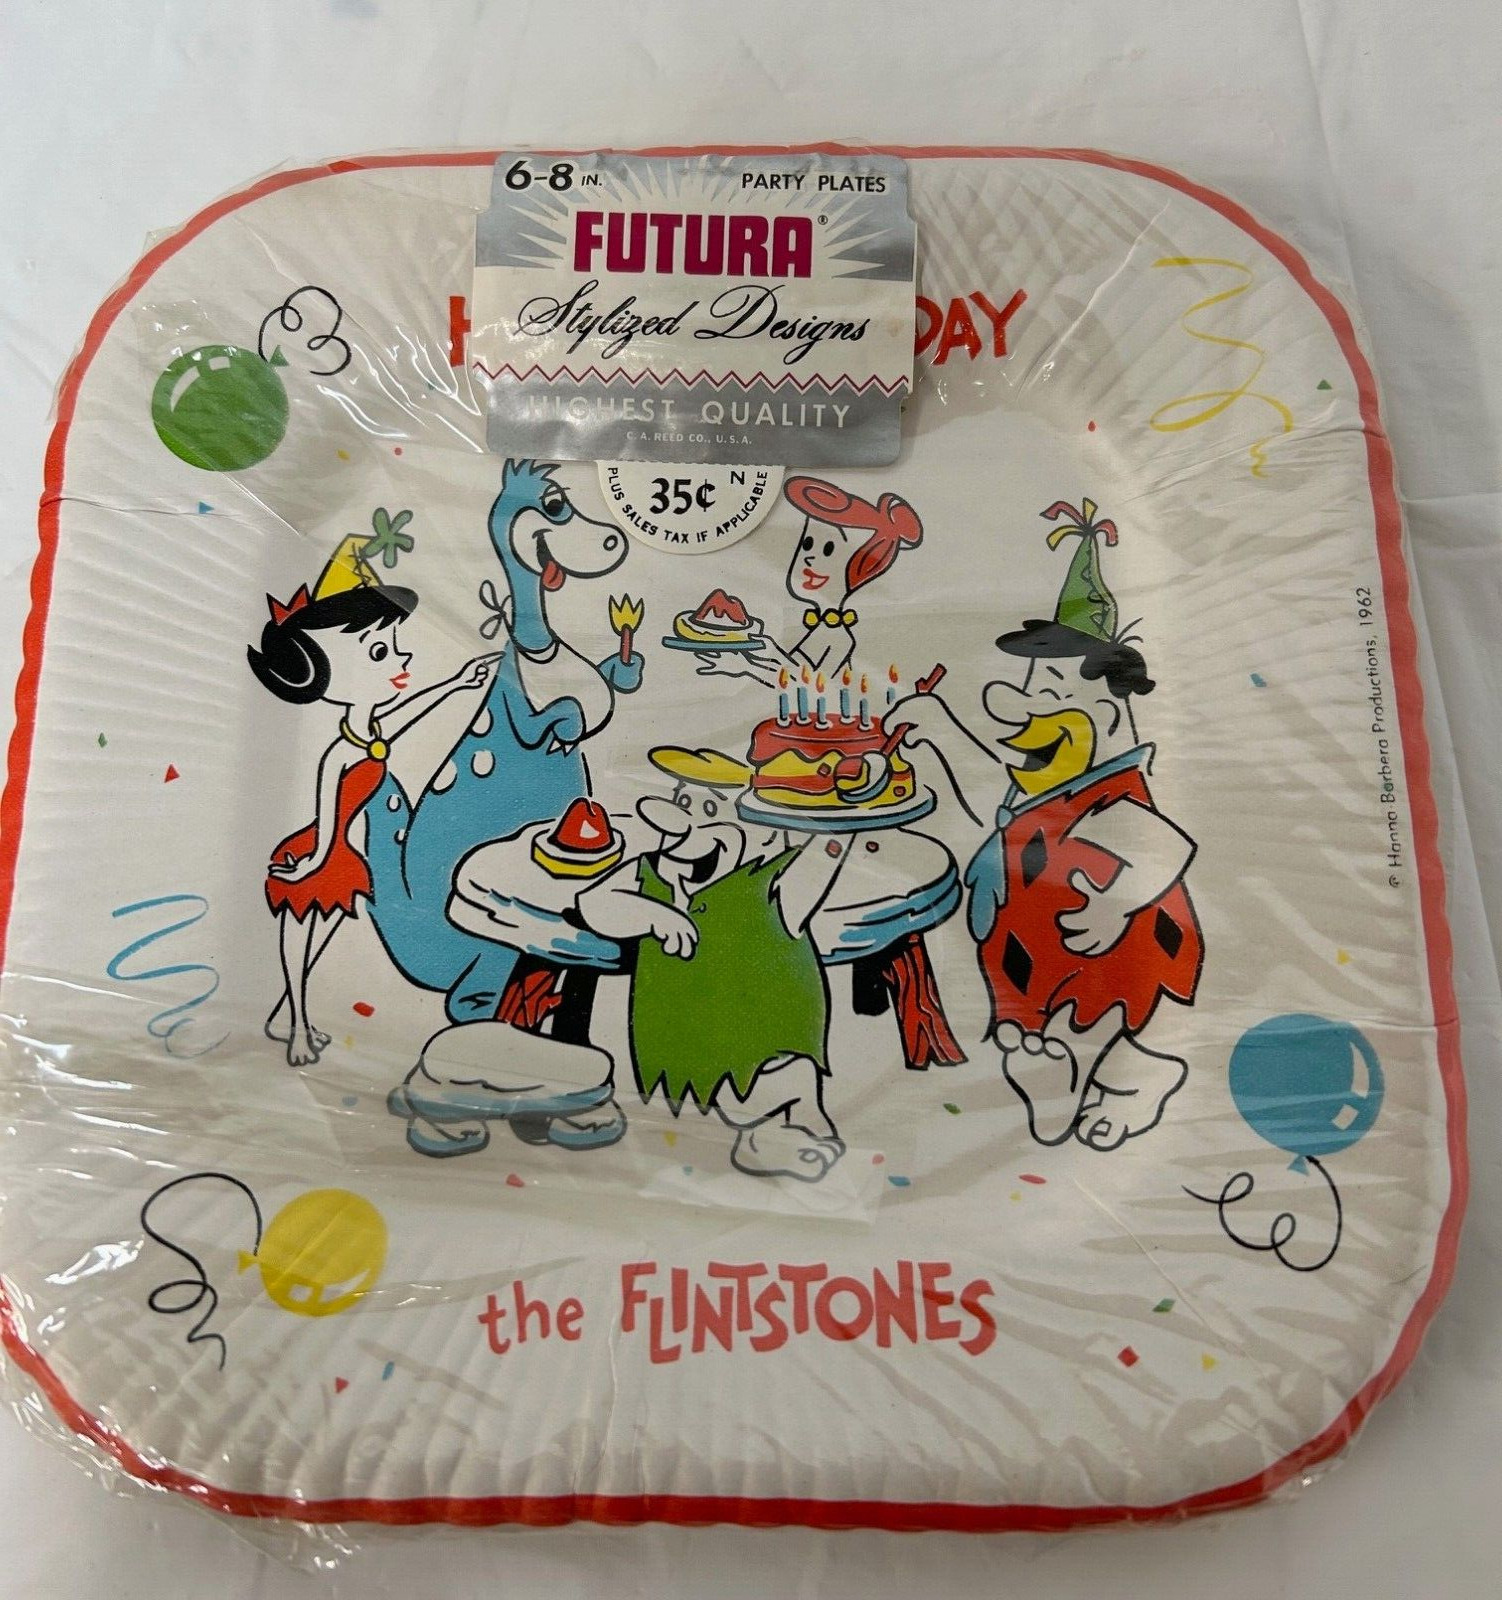 Vintage 1962 THE FLINTSTONES Party Plates FUTURA UNUSED Pkg of 6 Happy Birthday